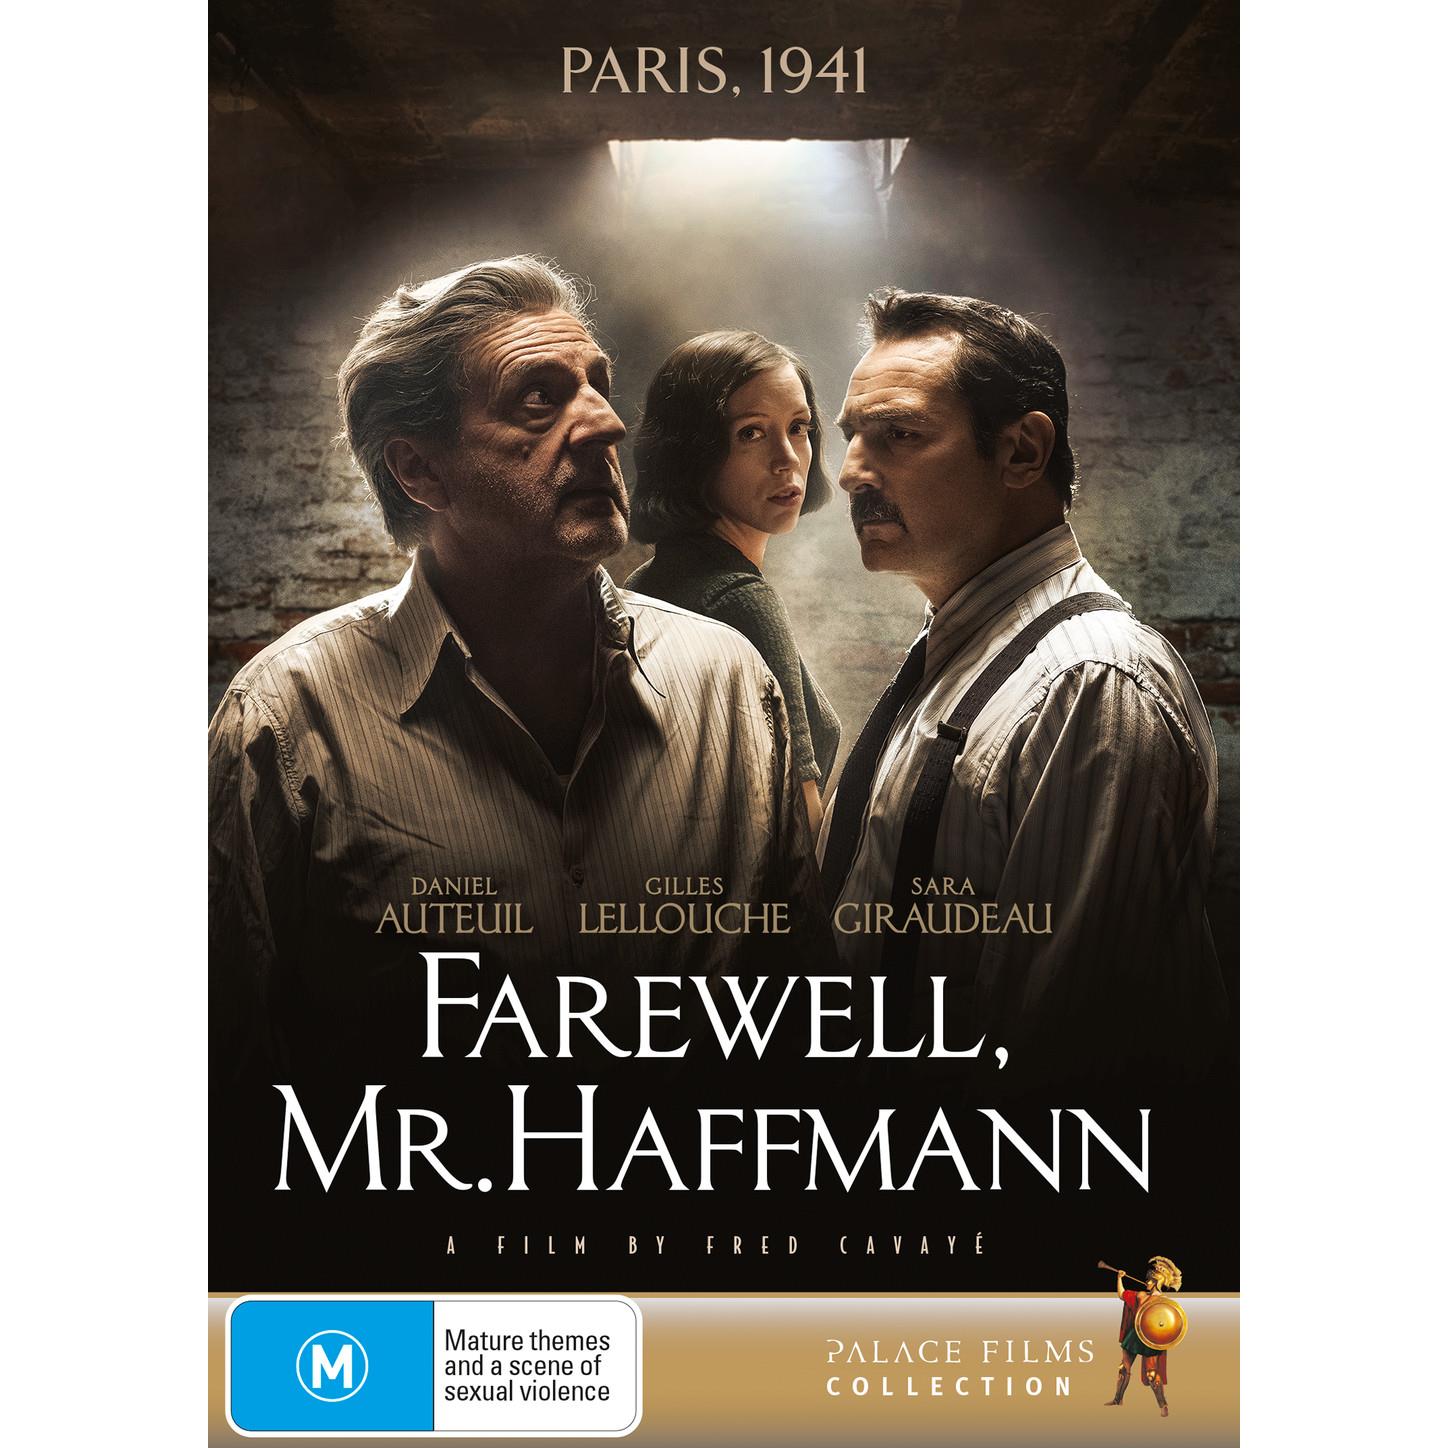 Adieu Monsieur Haffmann [Blu-Ray]: DVD et Blu-ray 